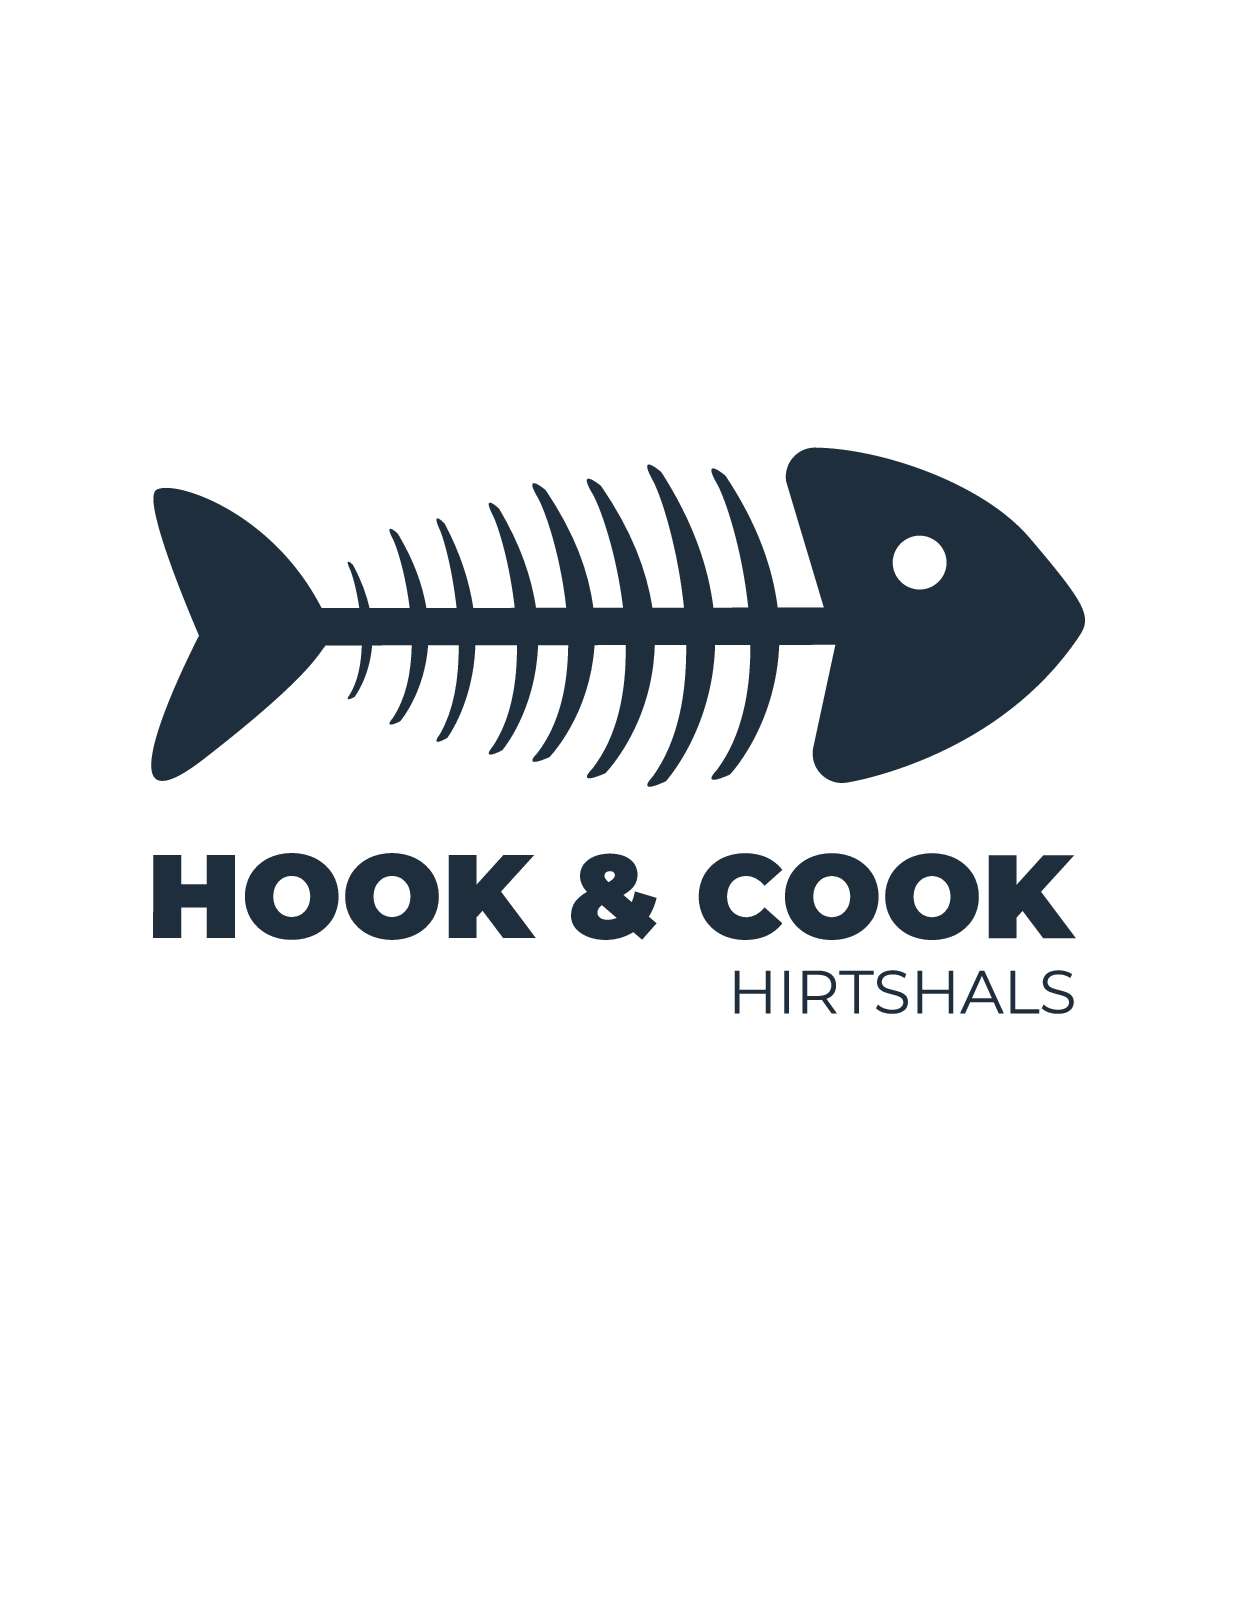 Hook & Cook logo Hirtshals